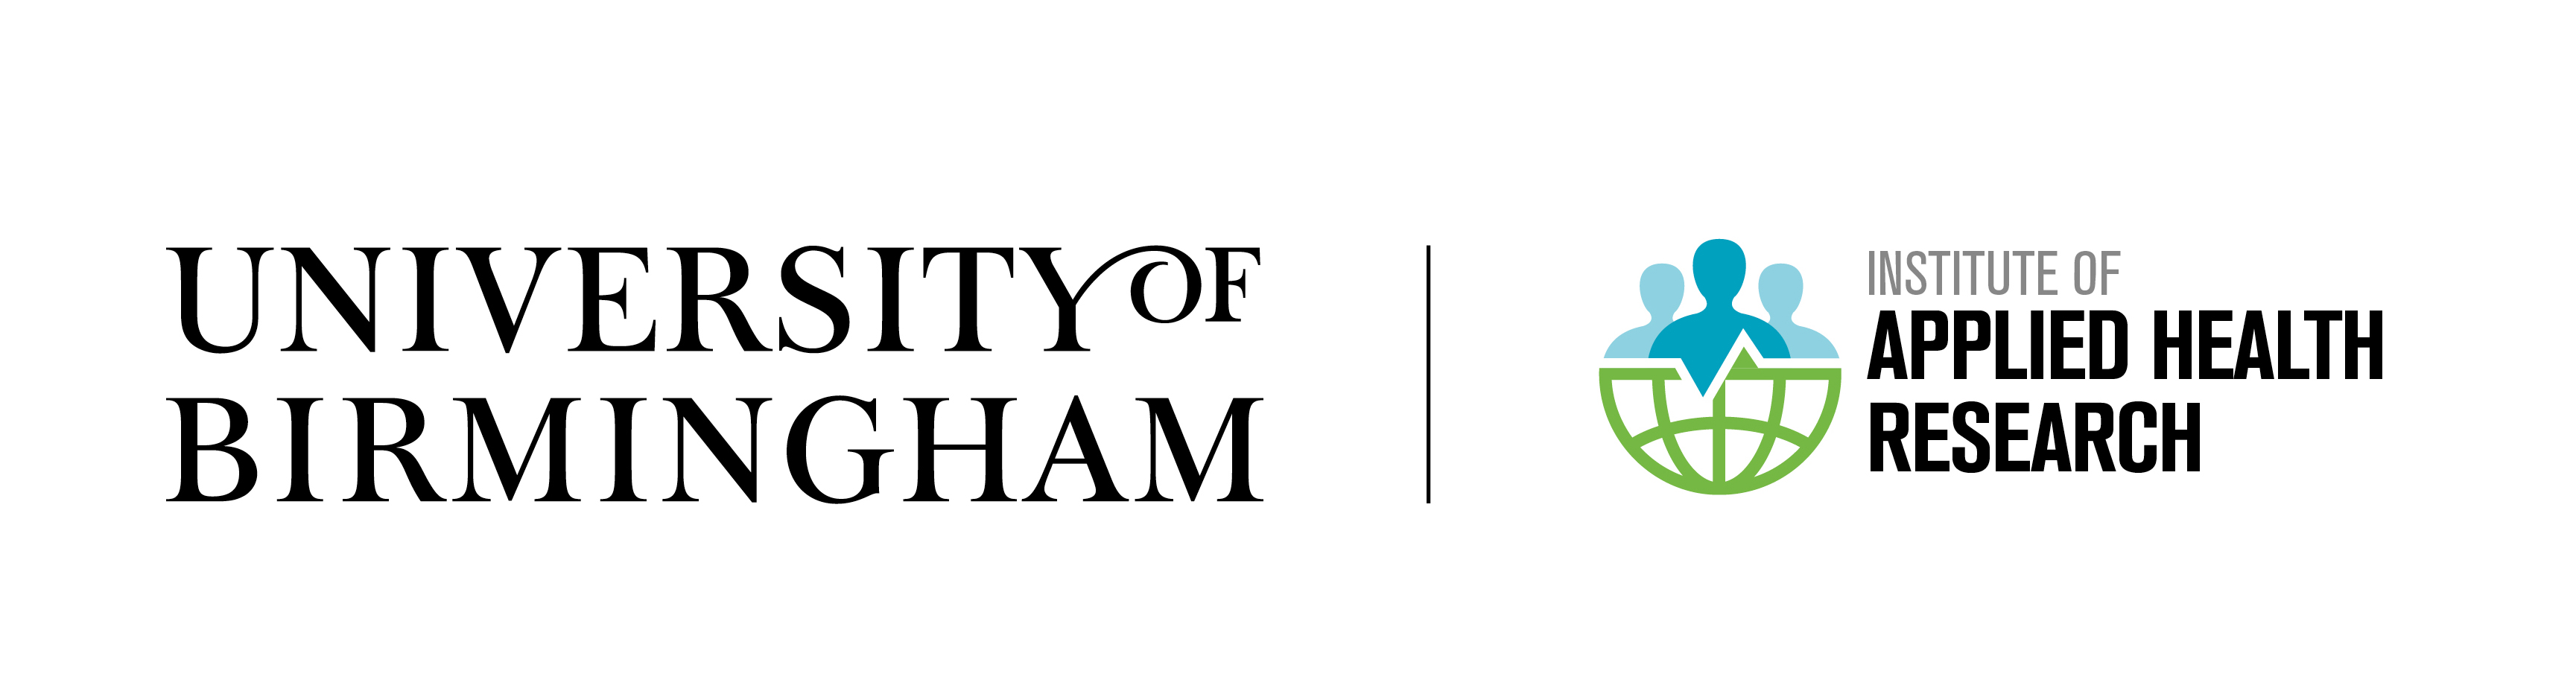 University of Birmingham | Applied Health Research